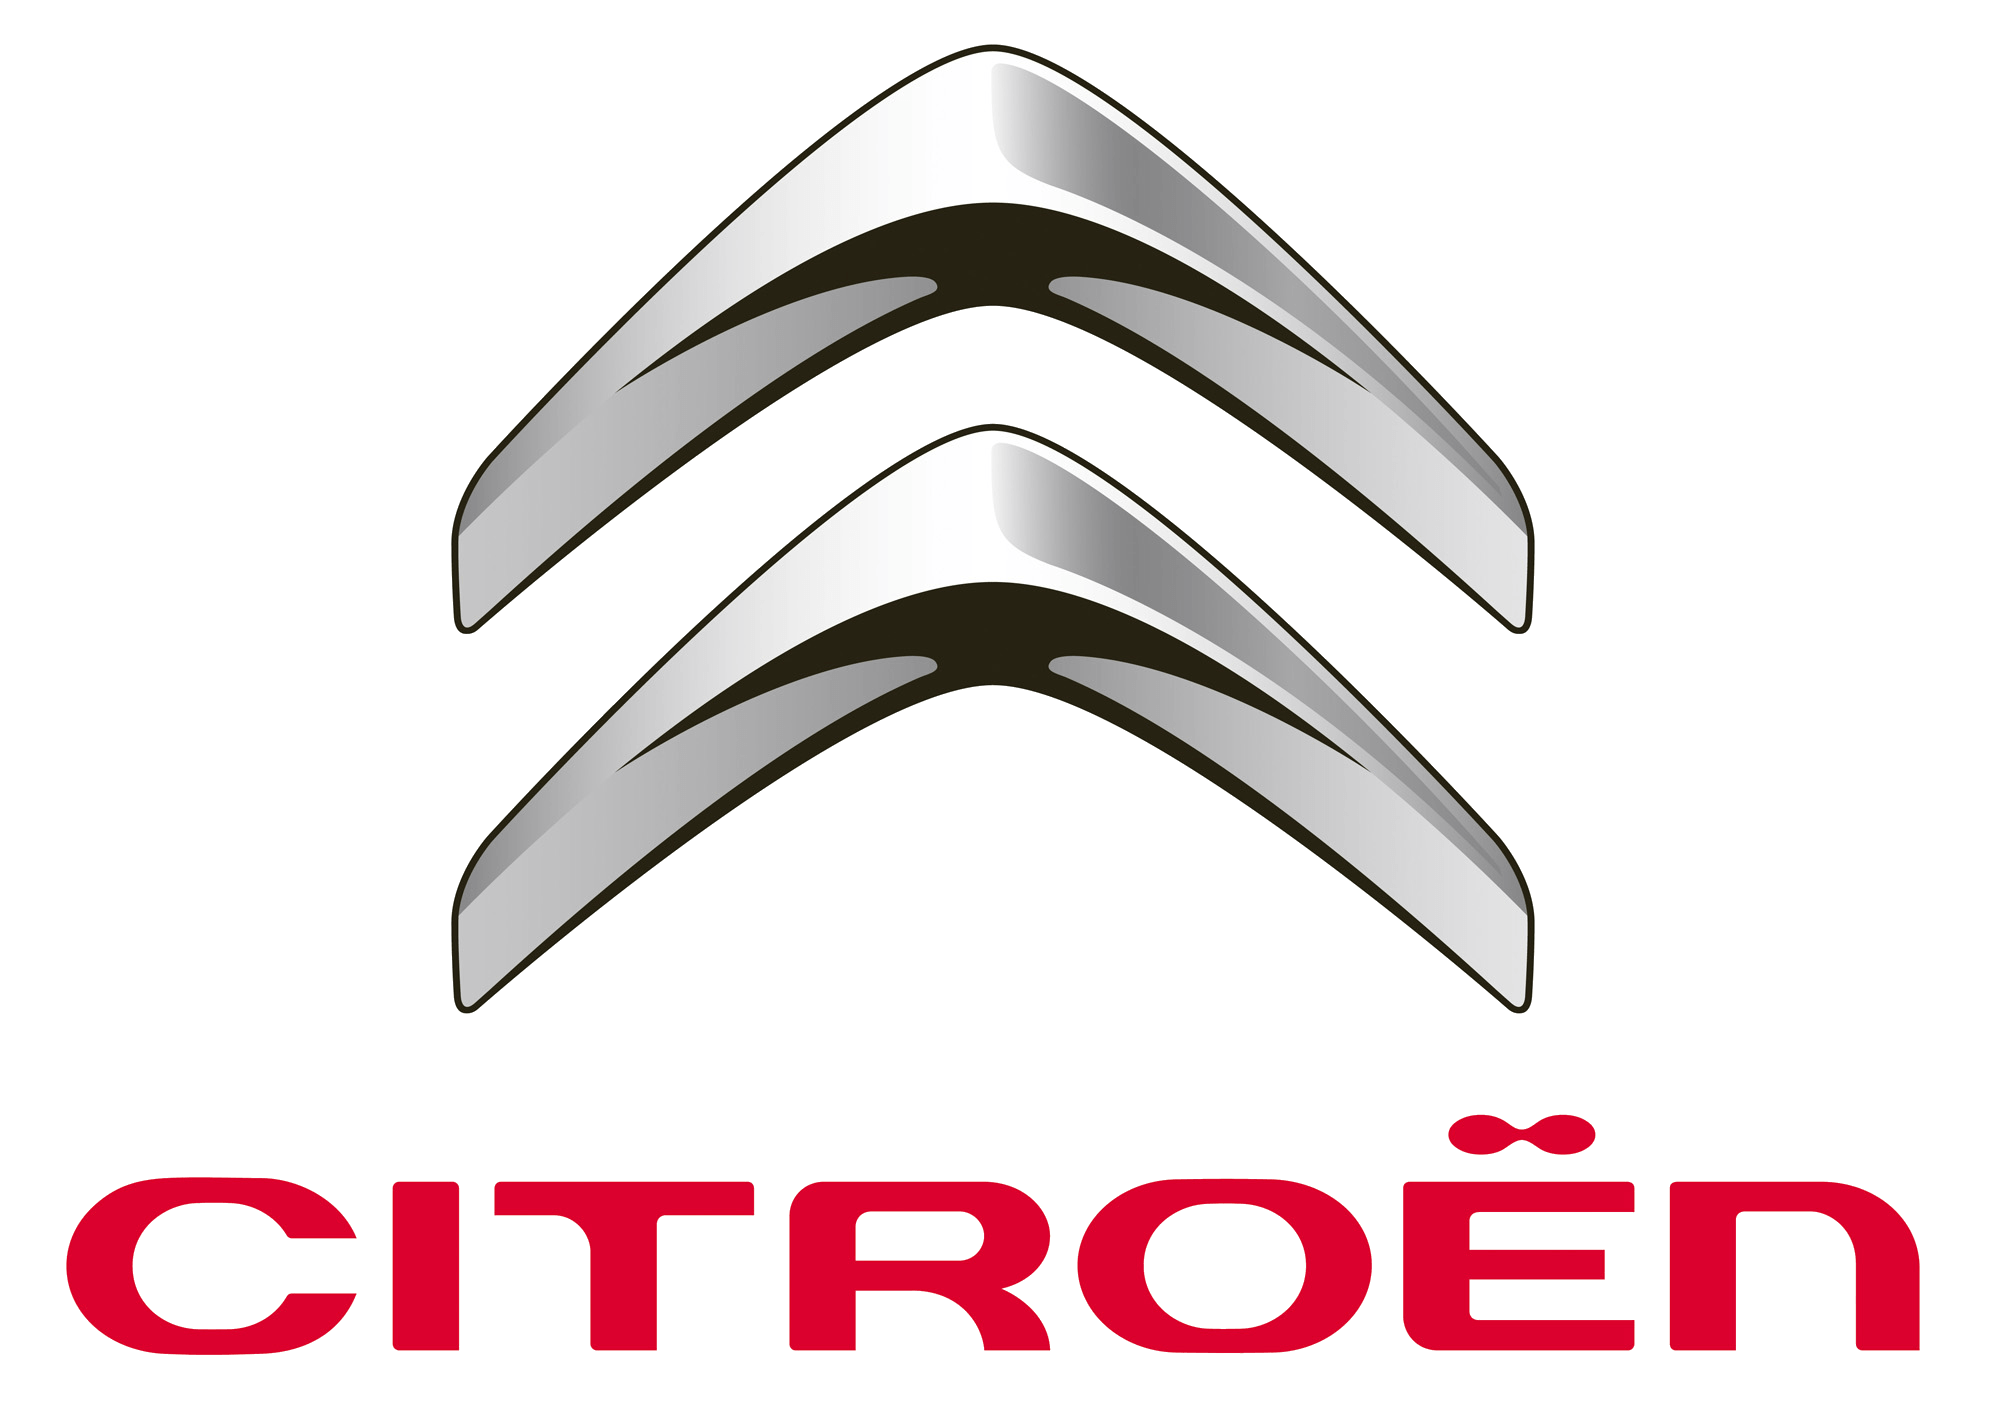 Two Boomerang Logo - Citroen Logo, Citroen Car Symbol Meaning and History | Car Brand ...